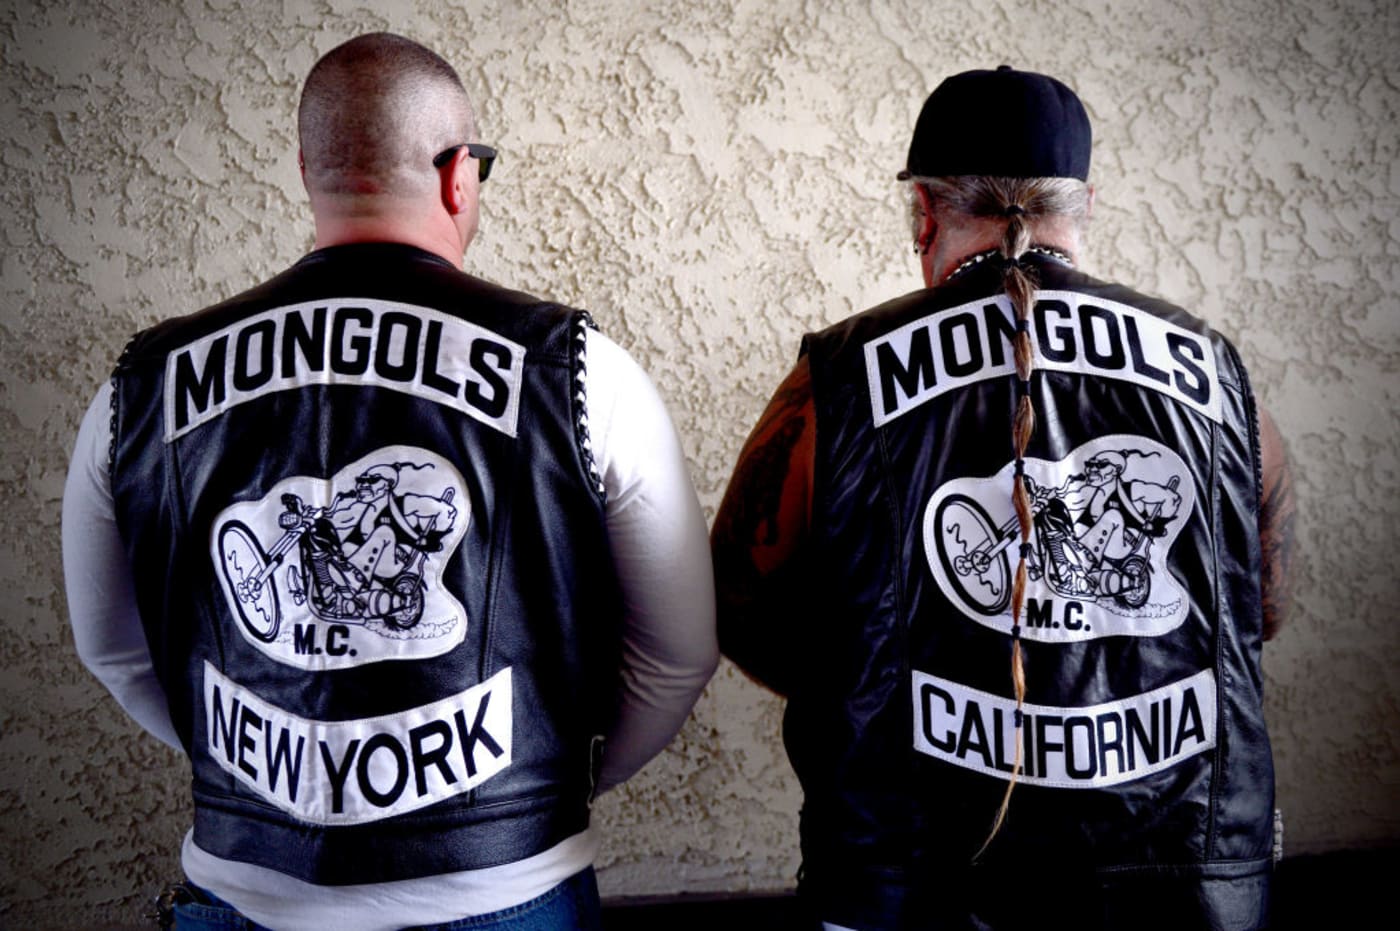 Mongols bikers